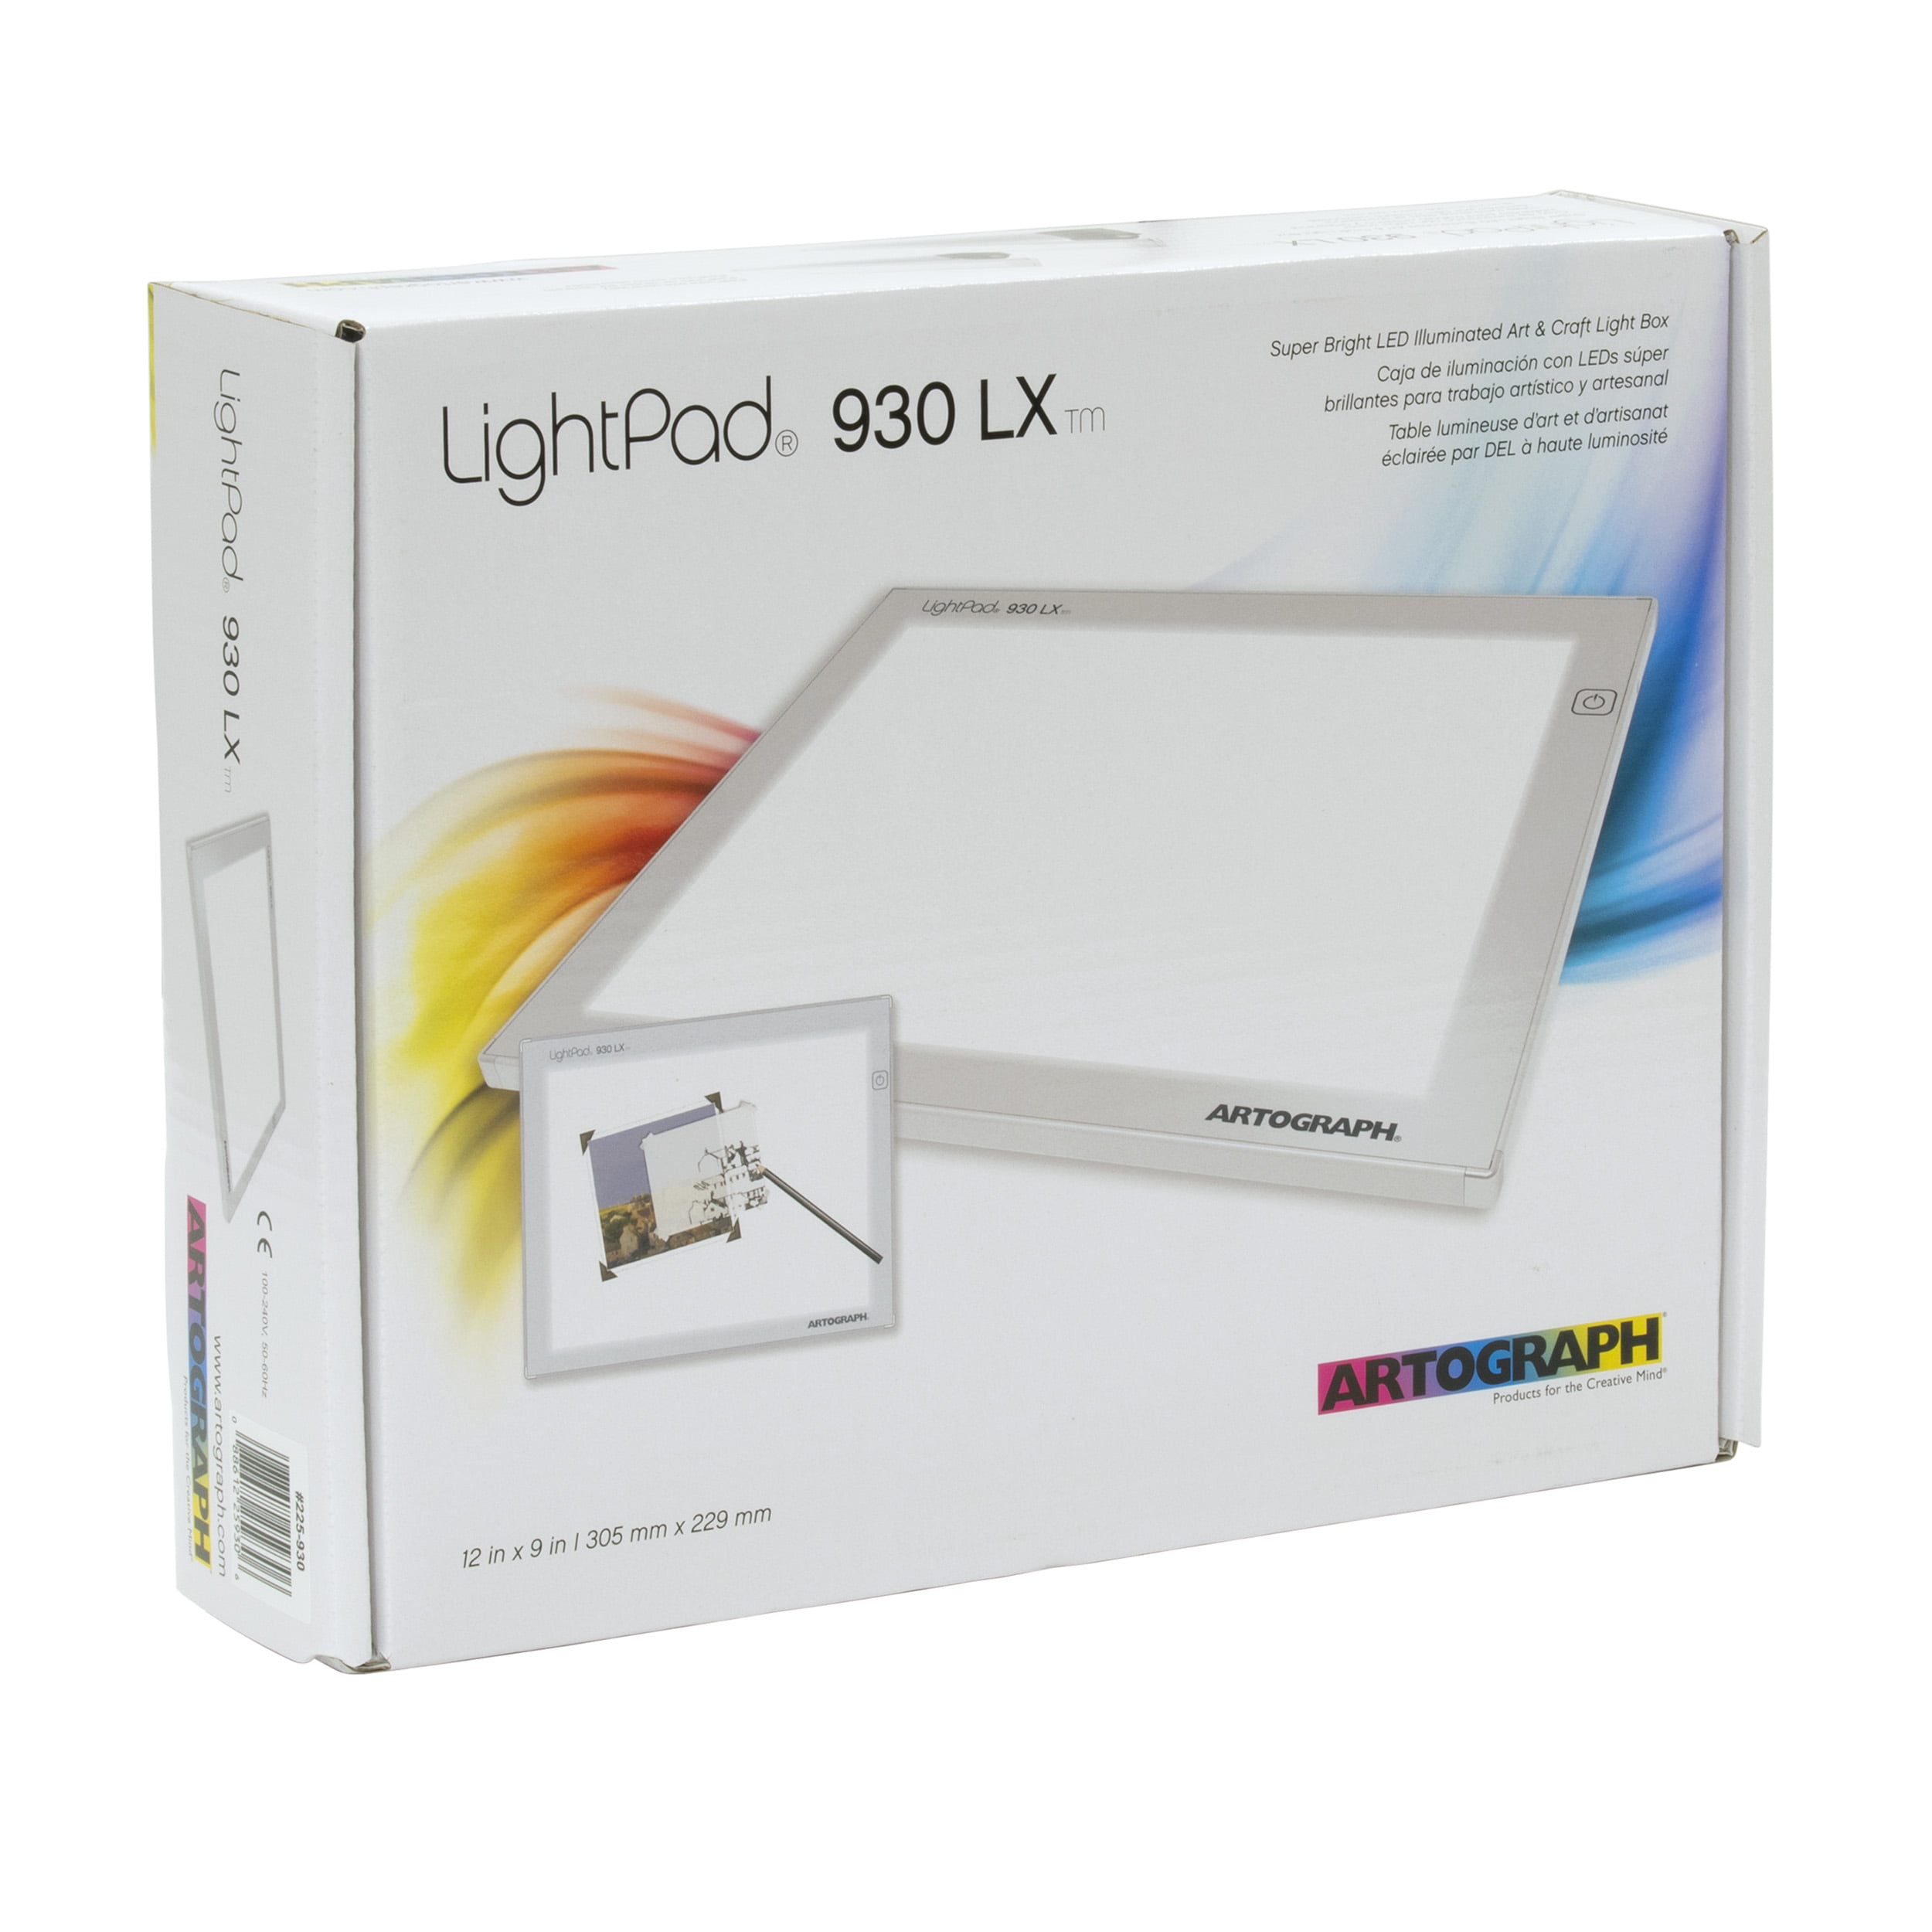 Artograph LightPad 920 LX 9in x 6in Super Bright LED Light Box. New Open  Box - Helia Beer Co